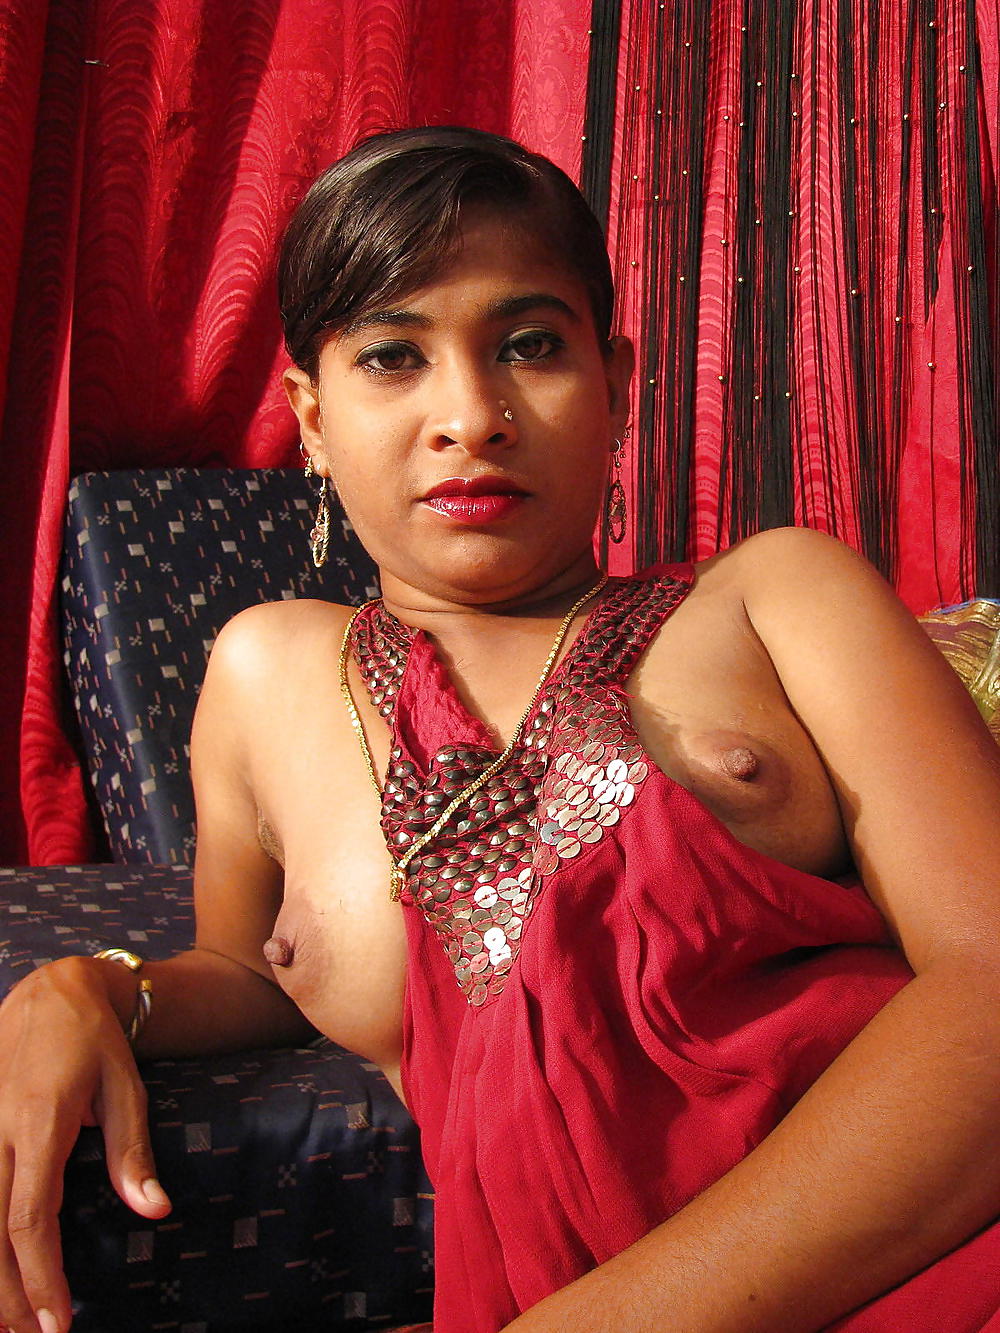 Desi Bala Chaud Et Sexy - Hardcore Indien #24978857